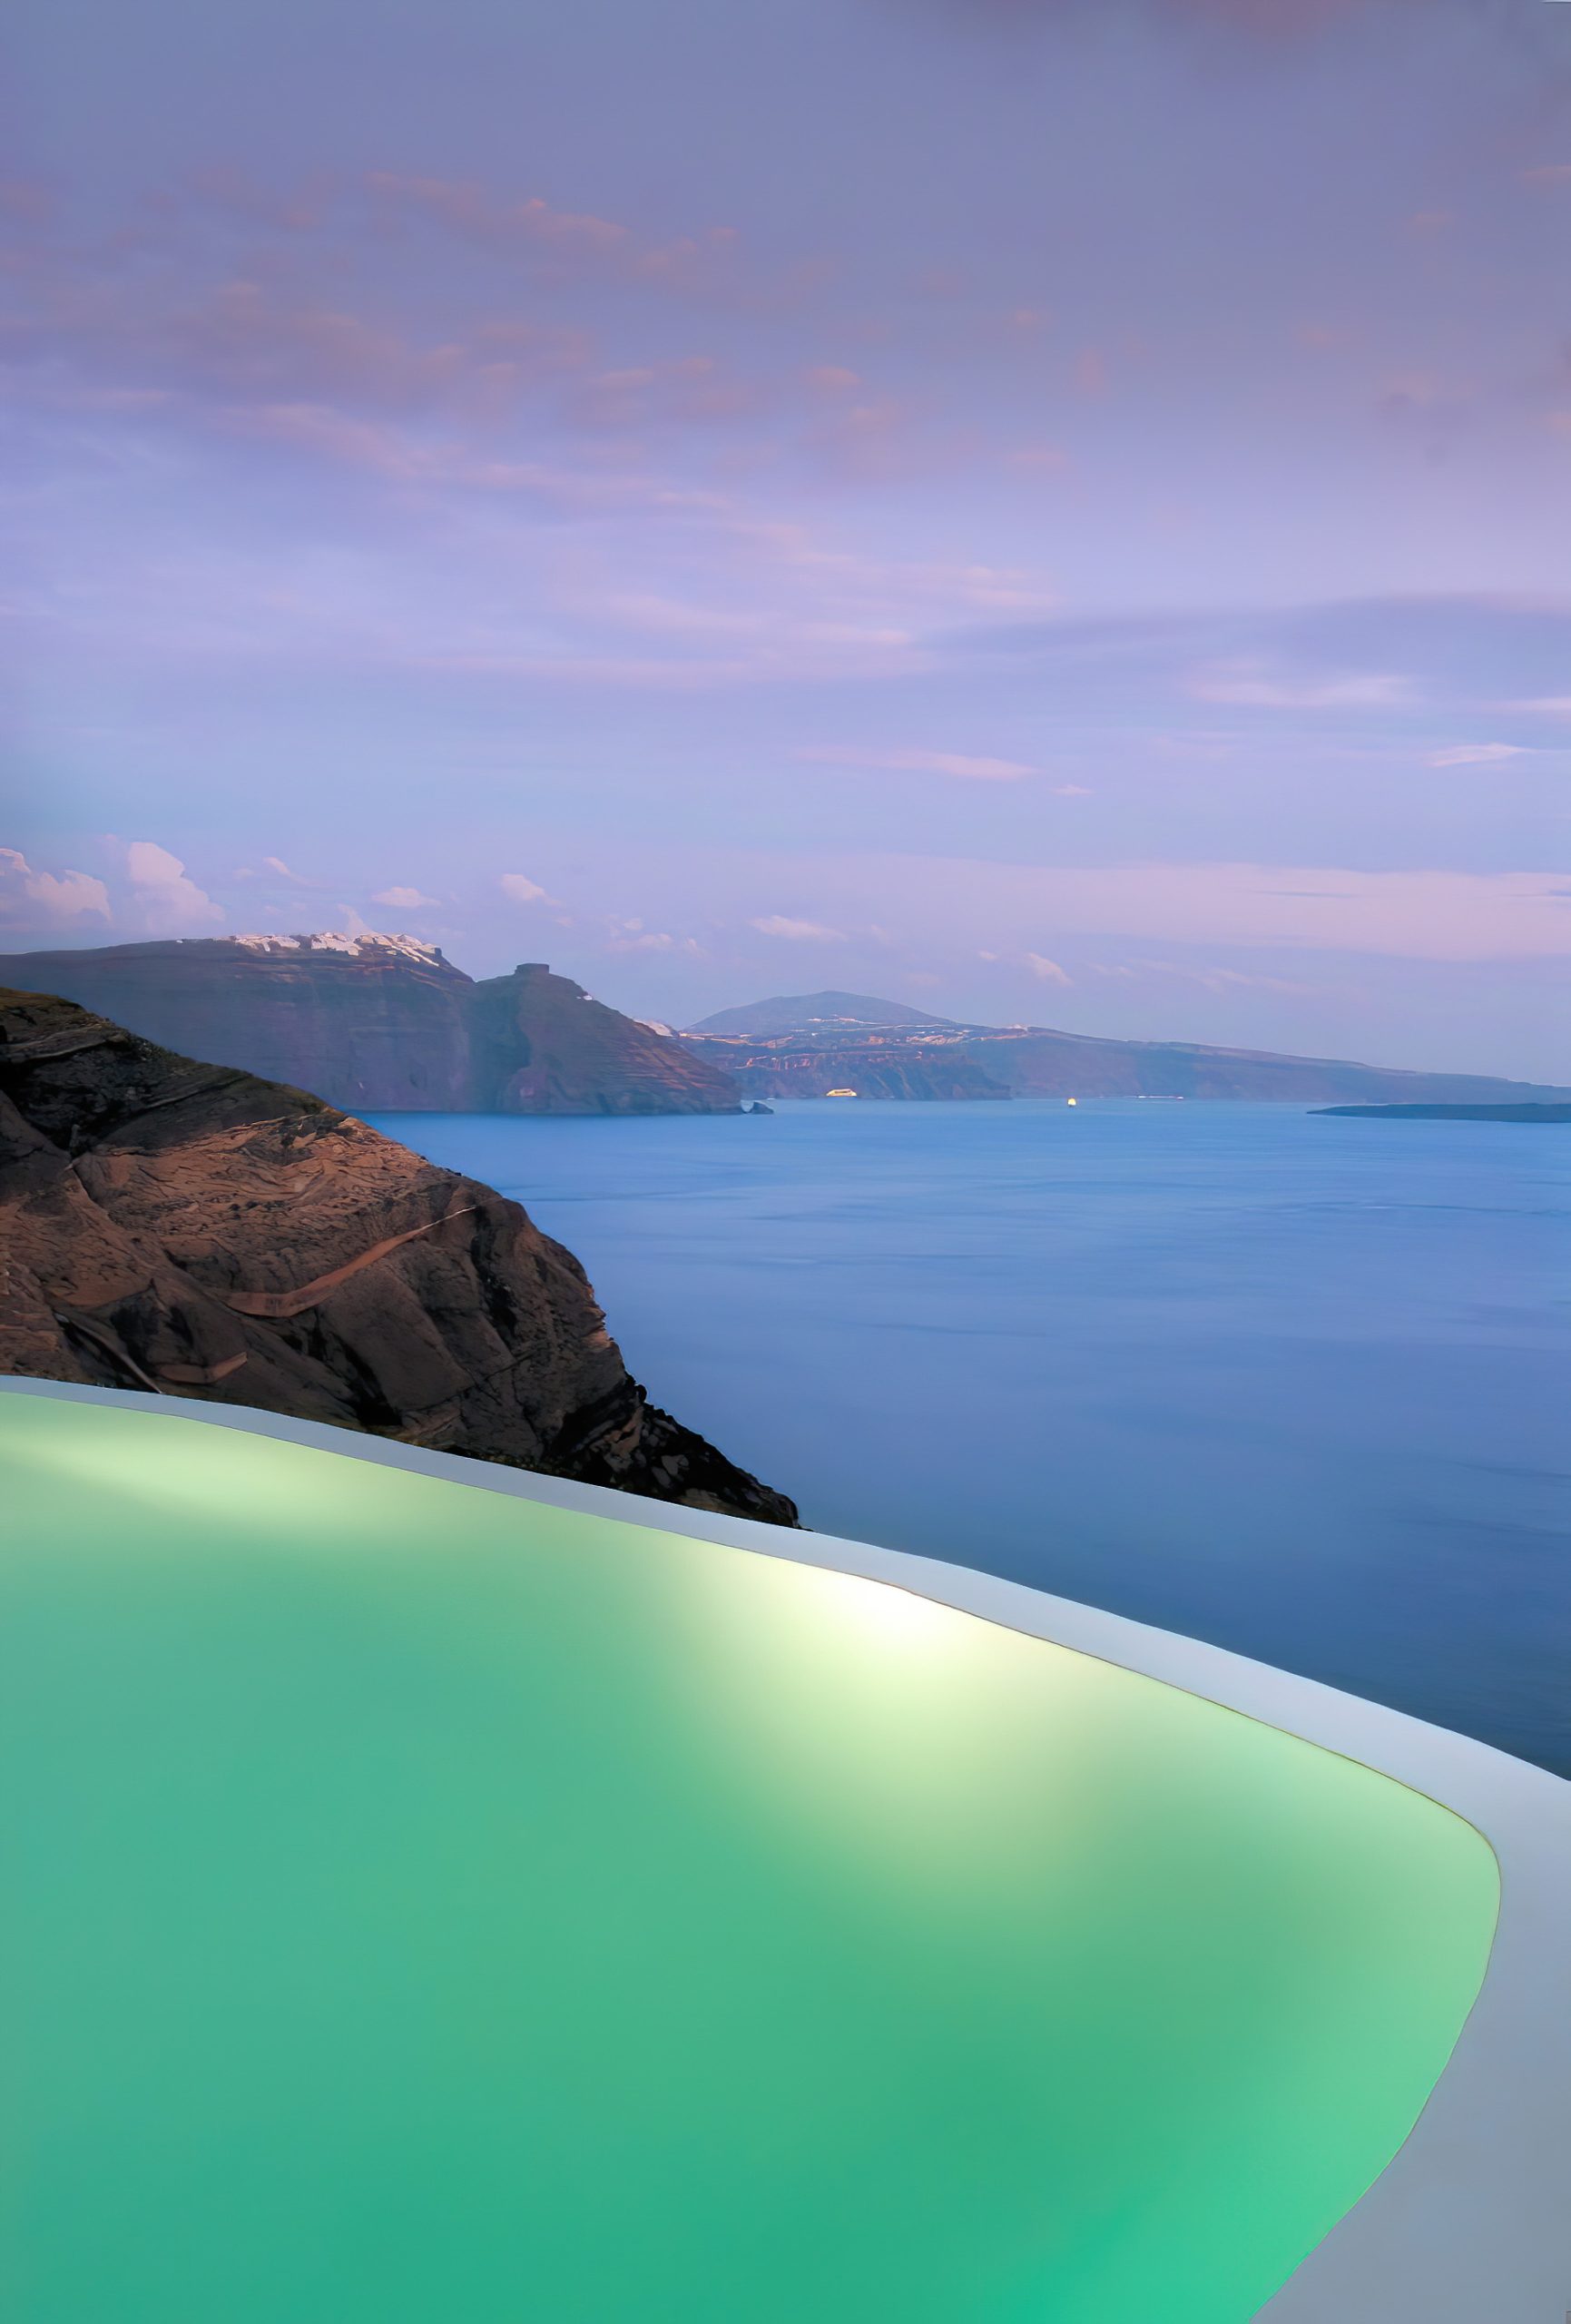 Mystique Hotel Santorini – Oia, Santorini Island, Greece – Ocean View Infinity Pool Sunset